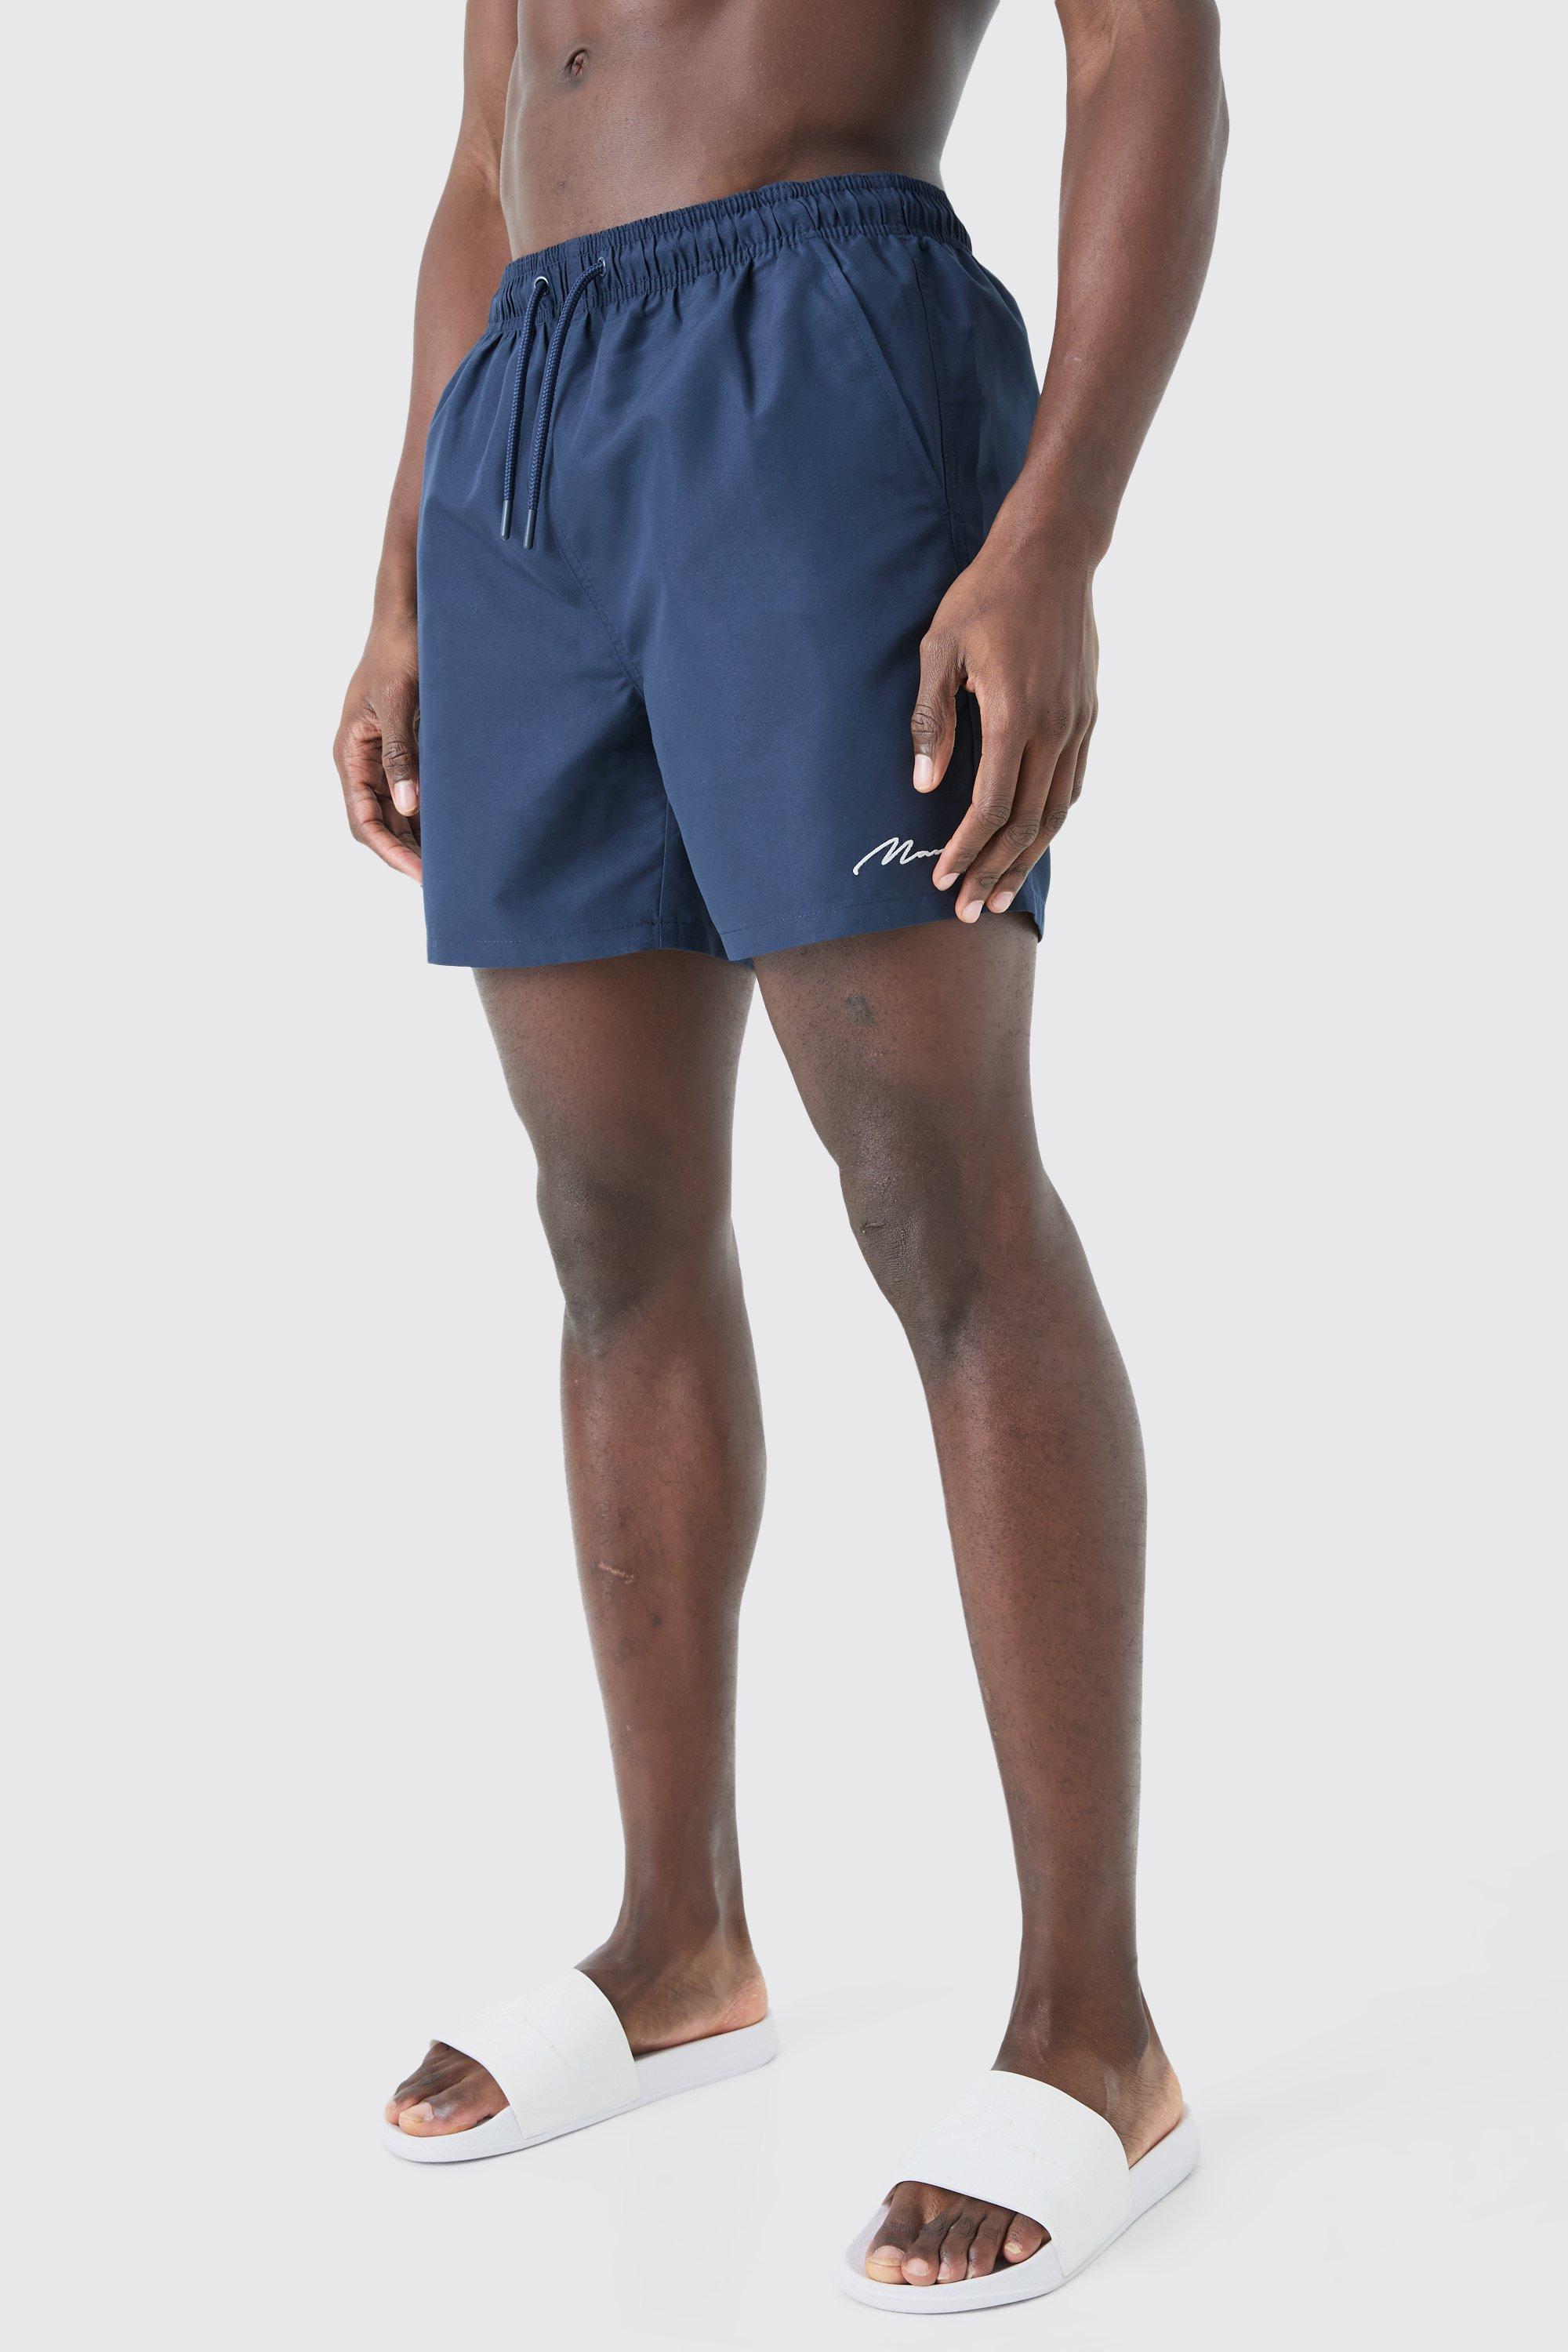 Image of Costume a pantaloncino medio con firma Man, Navy